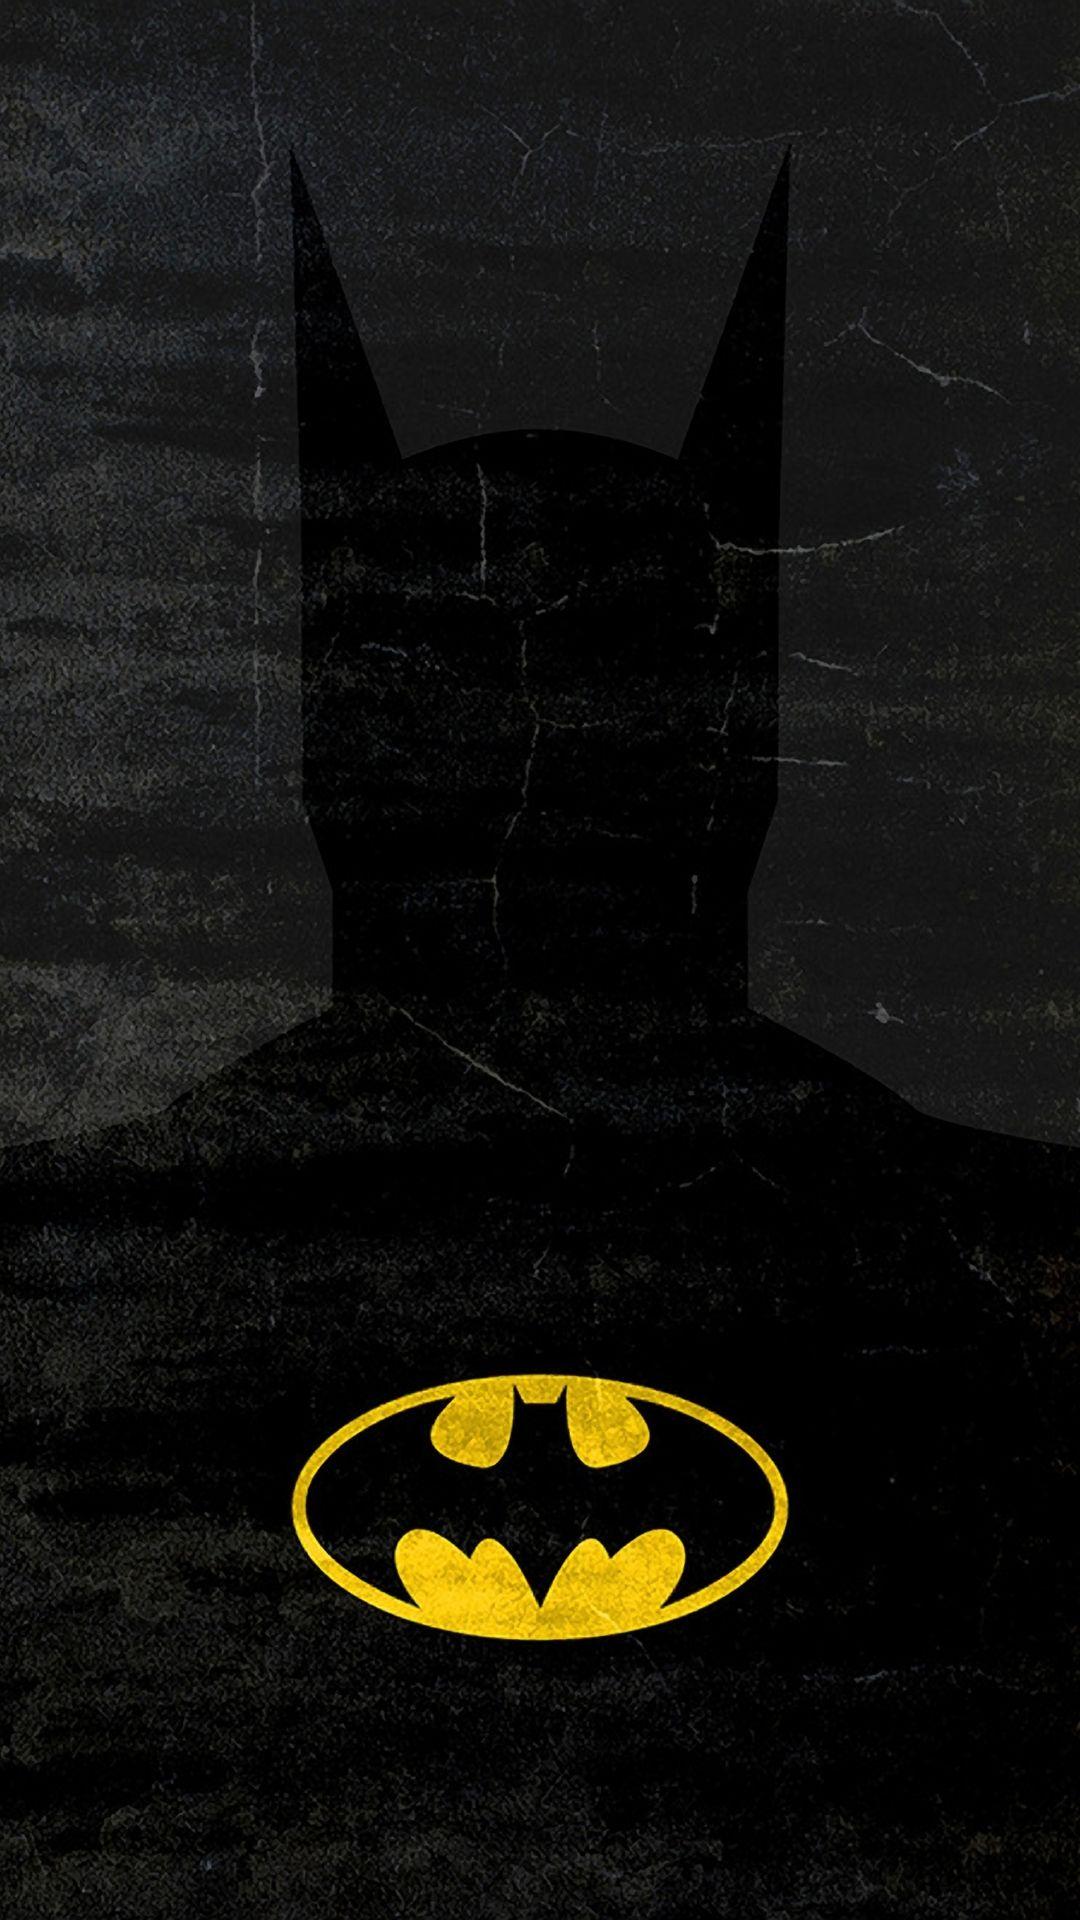 Batman iPhone 6 Plus Wallpapers - Top Free Batman iPhone 6 Plus Backgrounds  - WallpaperAccess